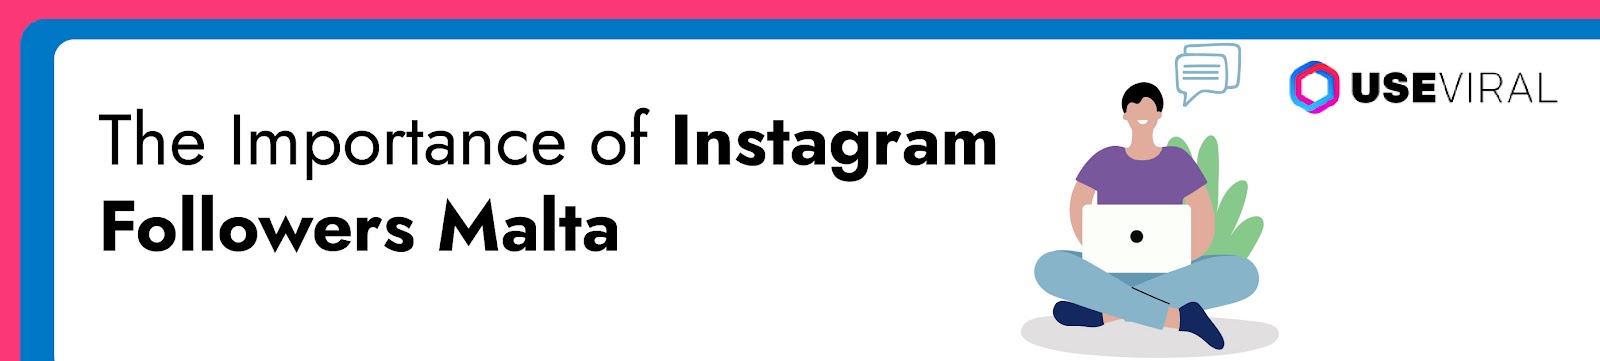 The Importance of Instagram Followers Malta